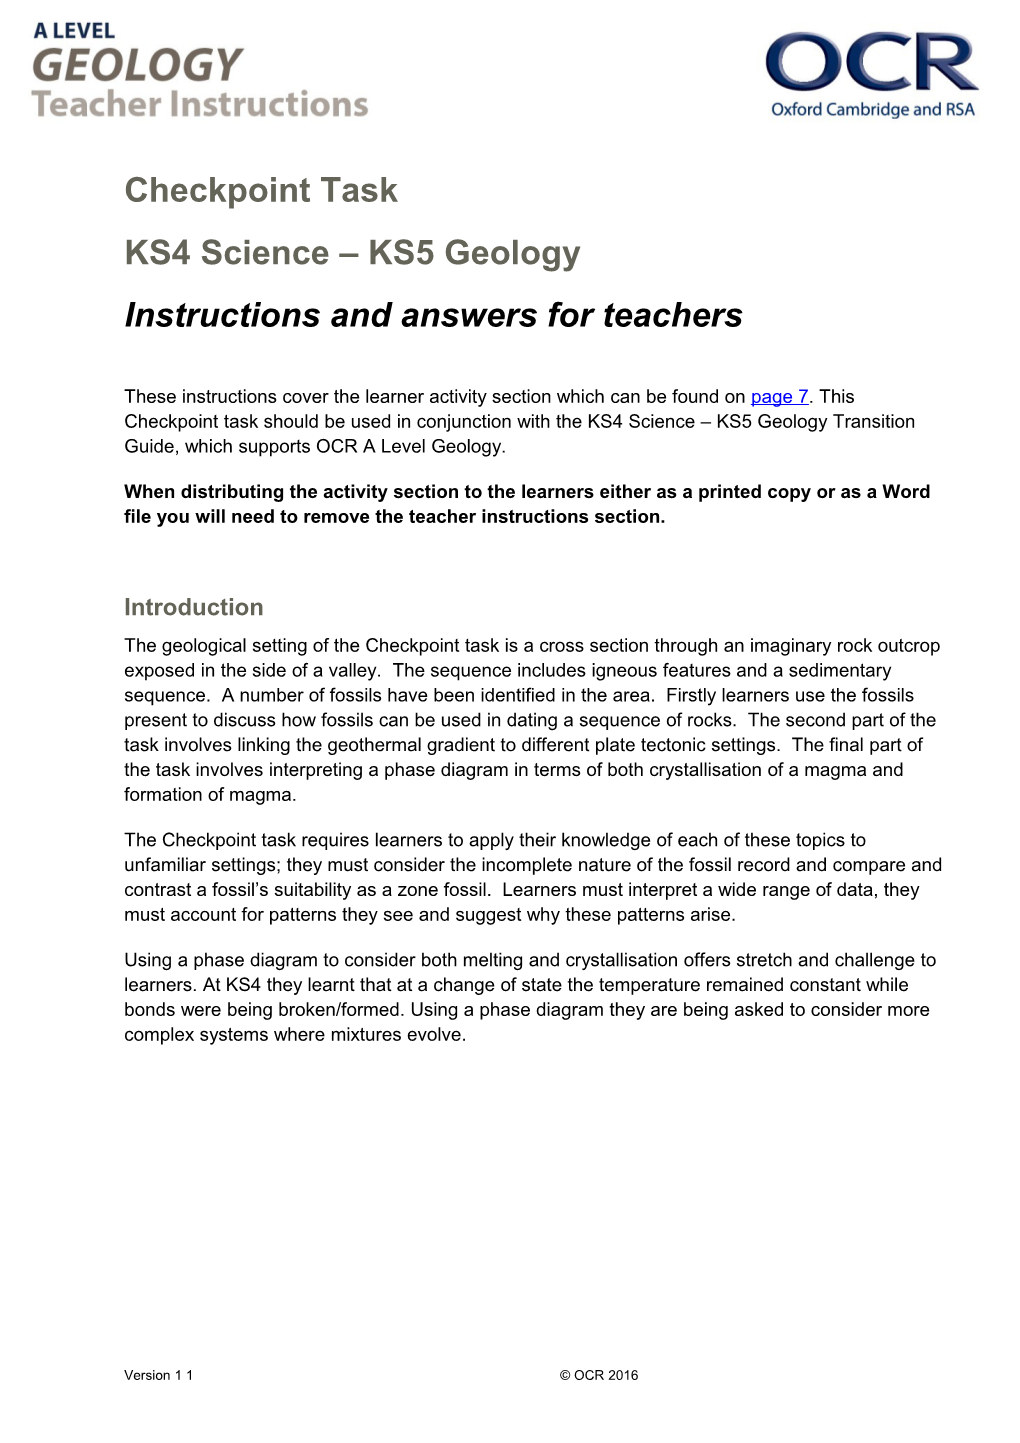 A Level Geology Checkpoint Task - KS4 Science KS5 Geology